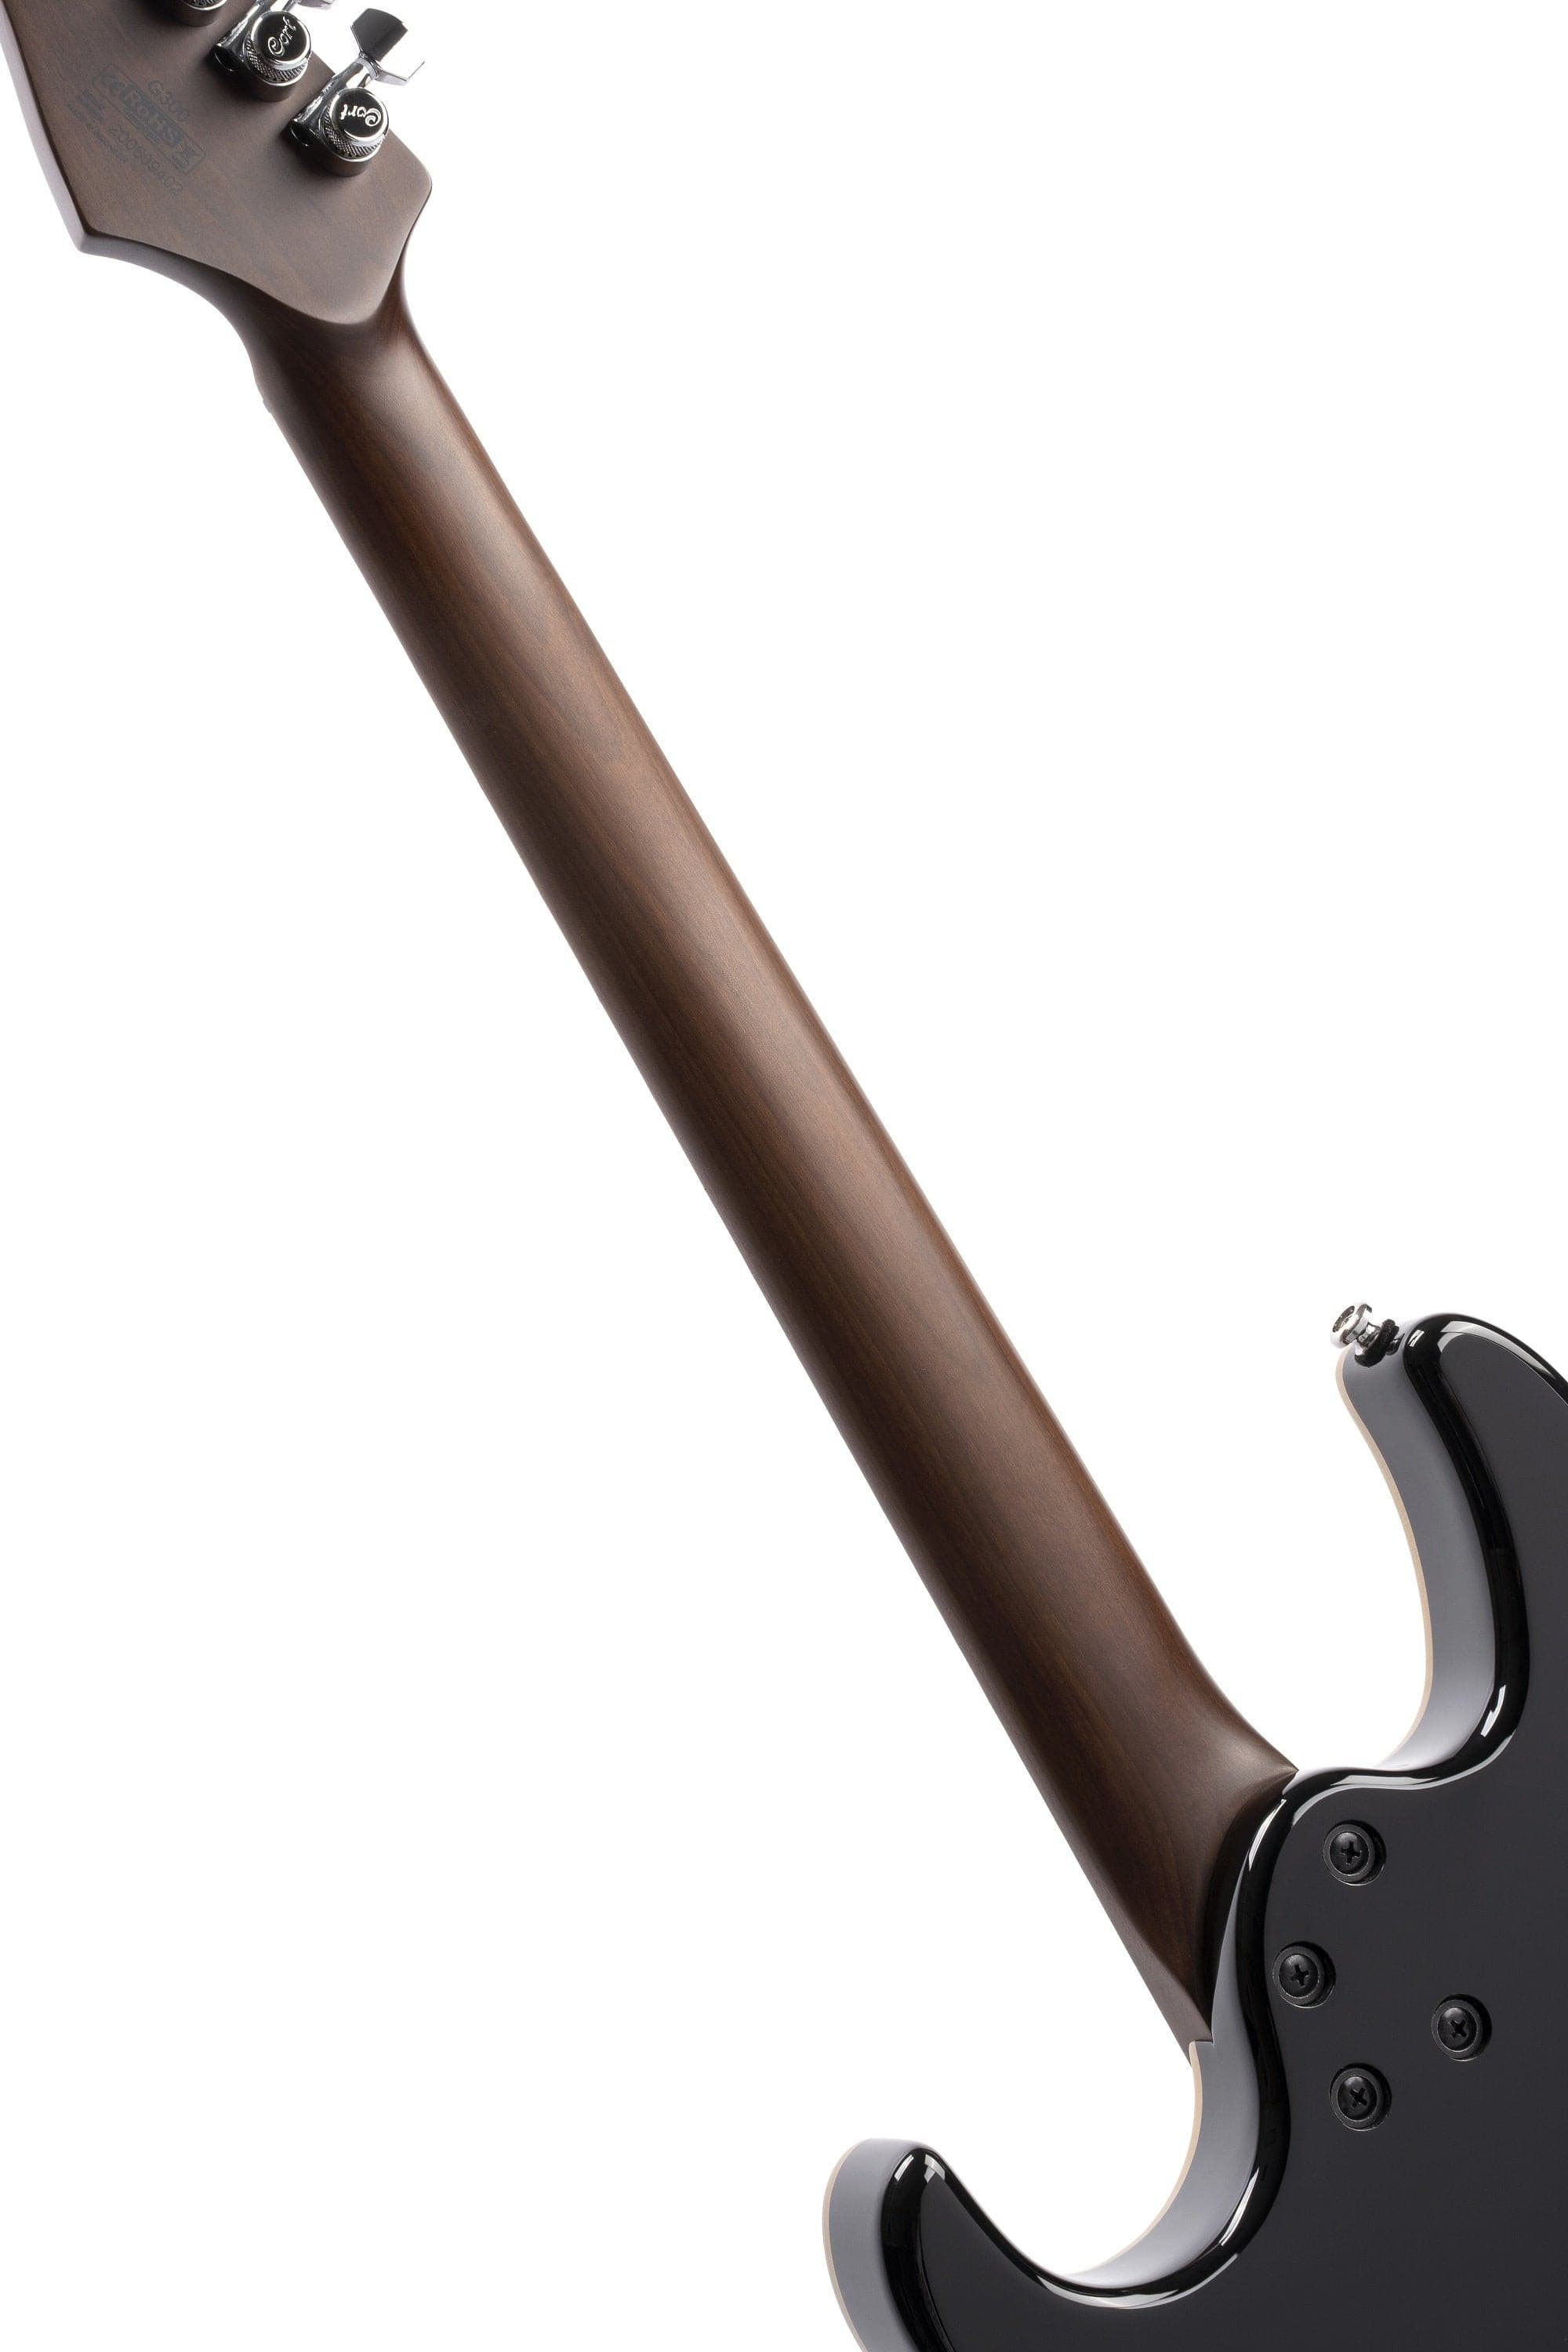 Cort G300 Pro Black, Electric Guitar for sale at Richards Guitars.